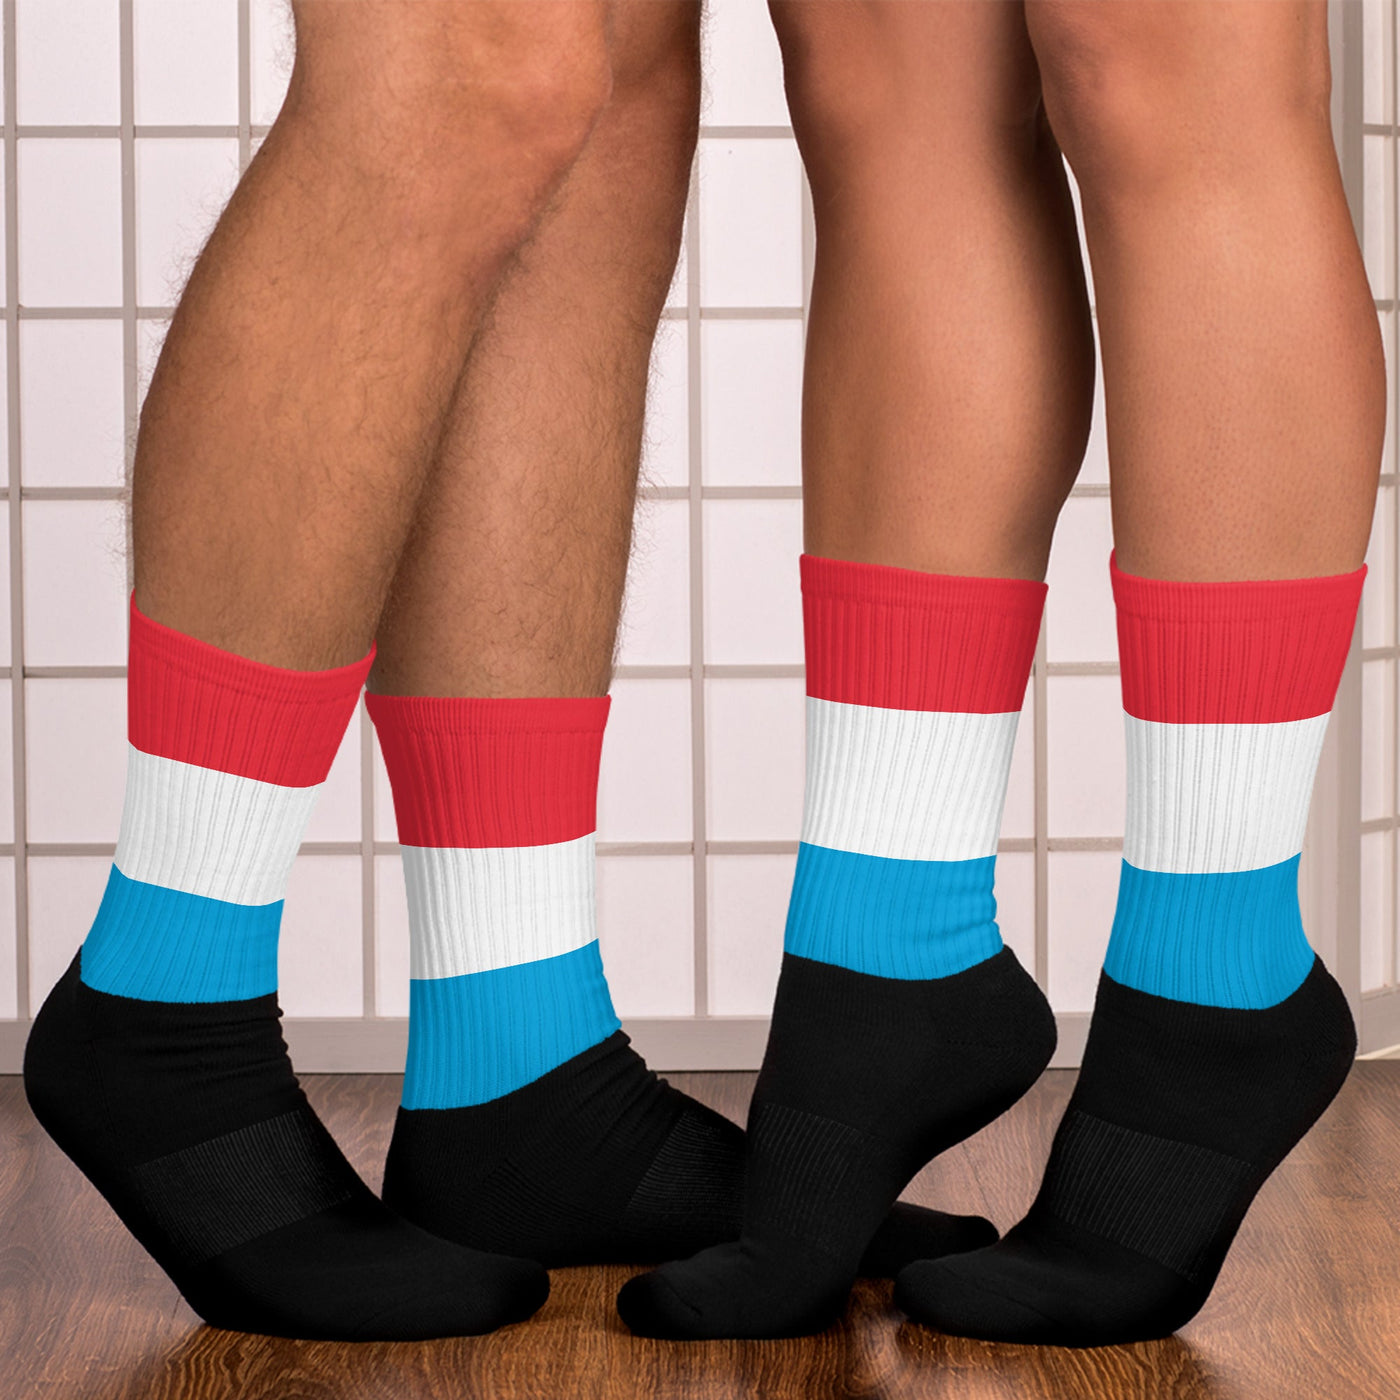 Luxembourg Socks - Ezra's Clothing